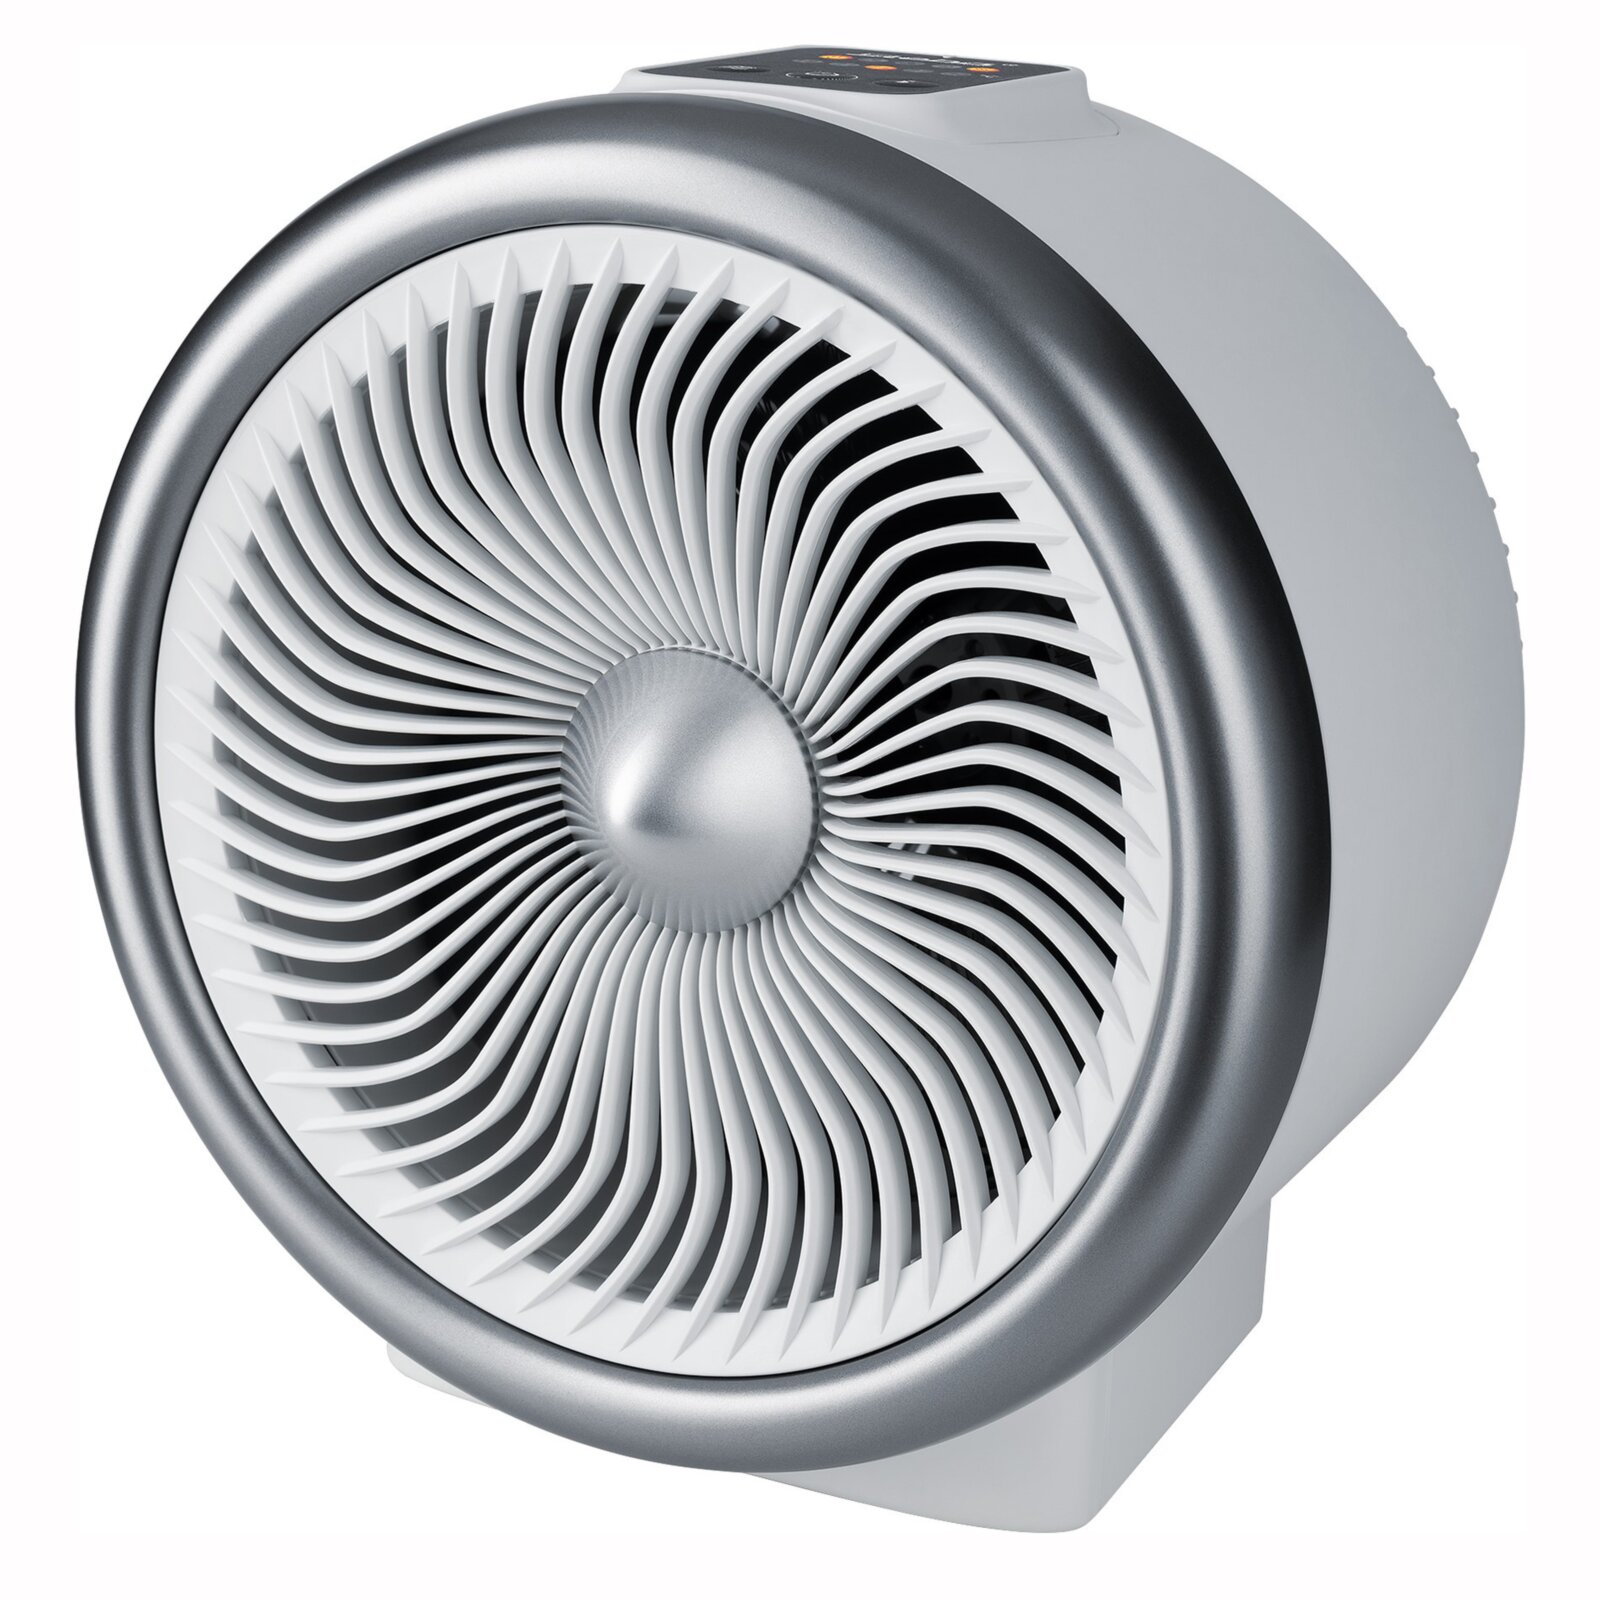 STEBA Ventilator-Heizlüfter - weiß-silber - 2 Leistungsstufen